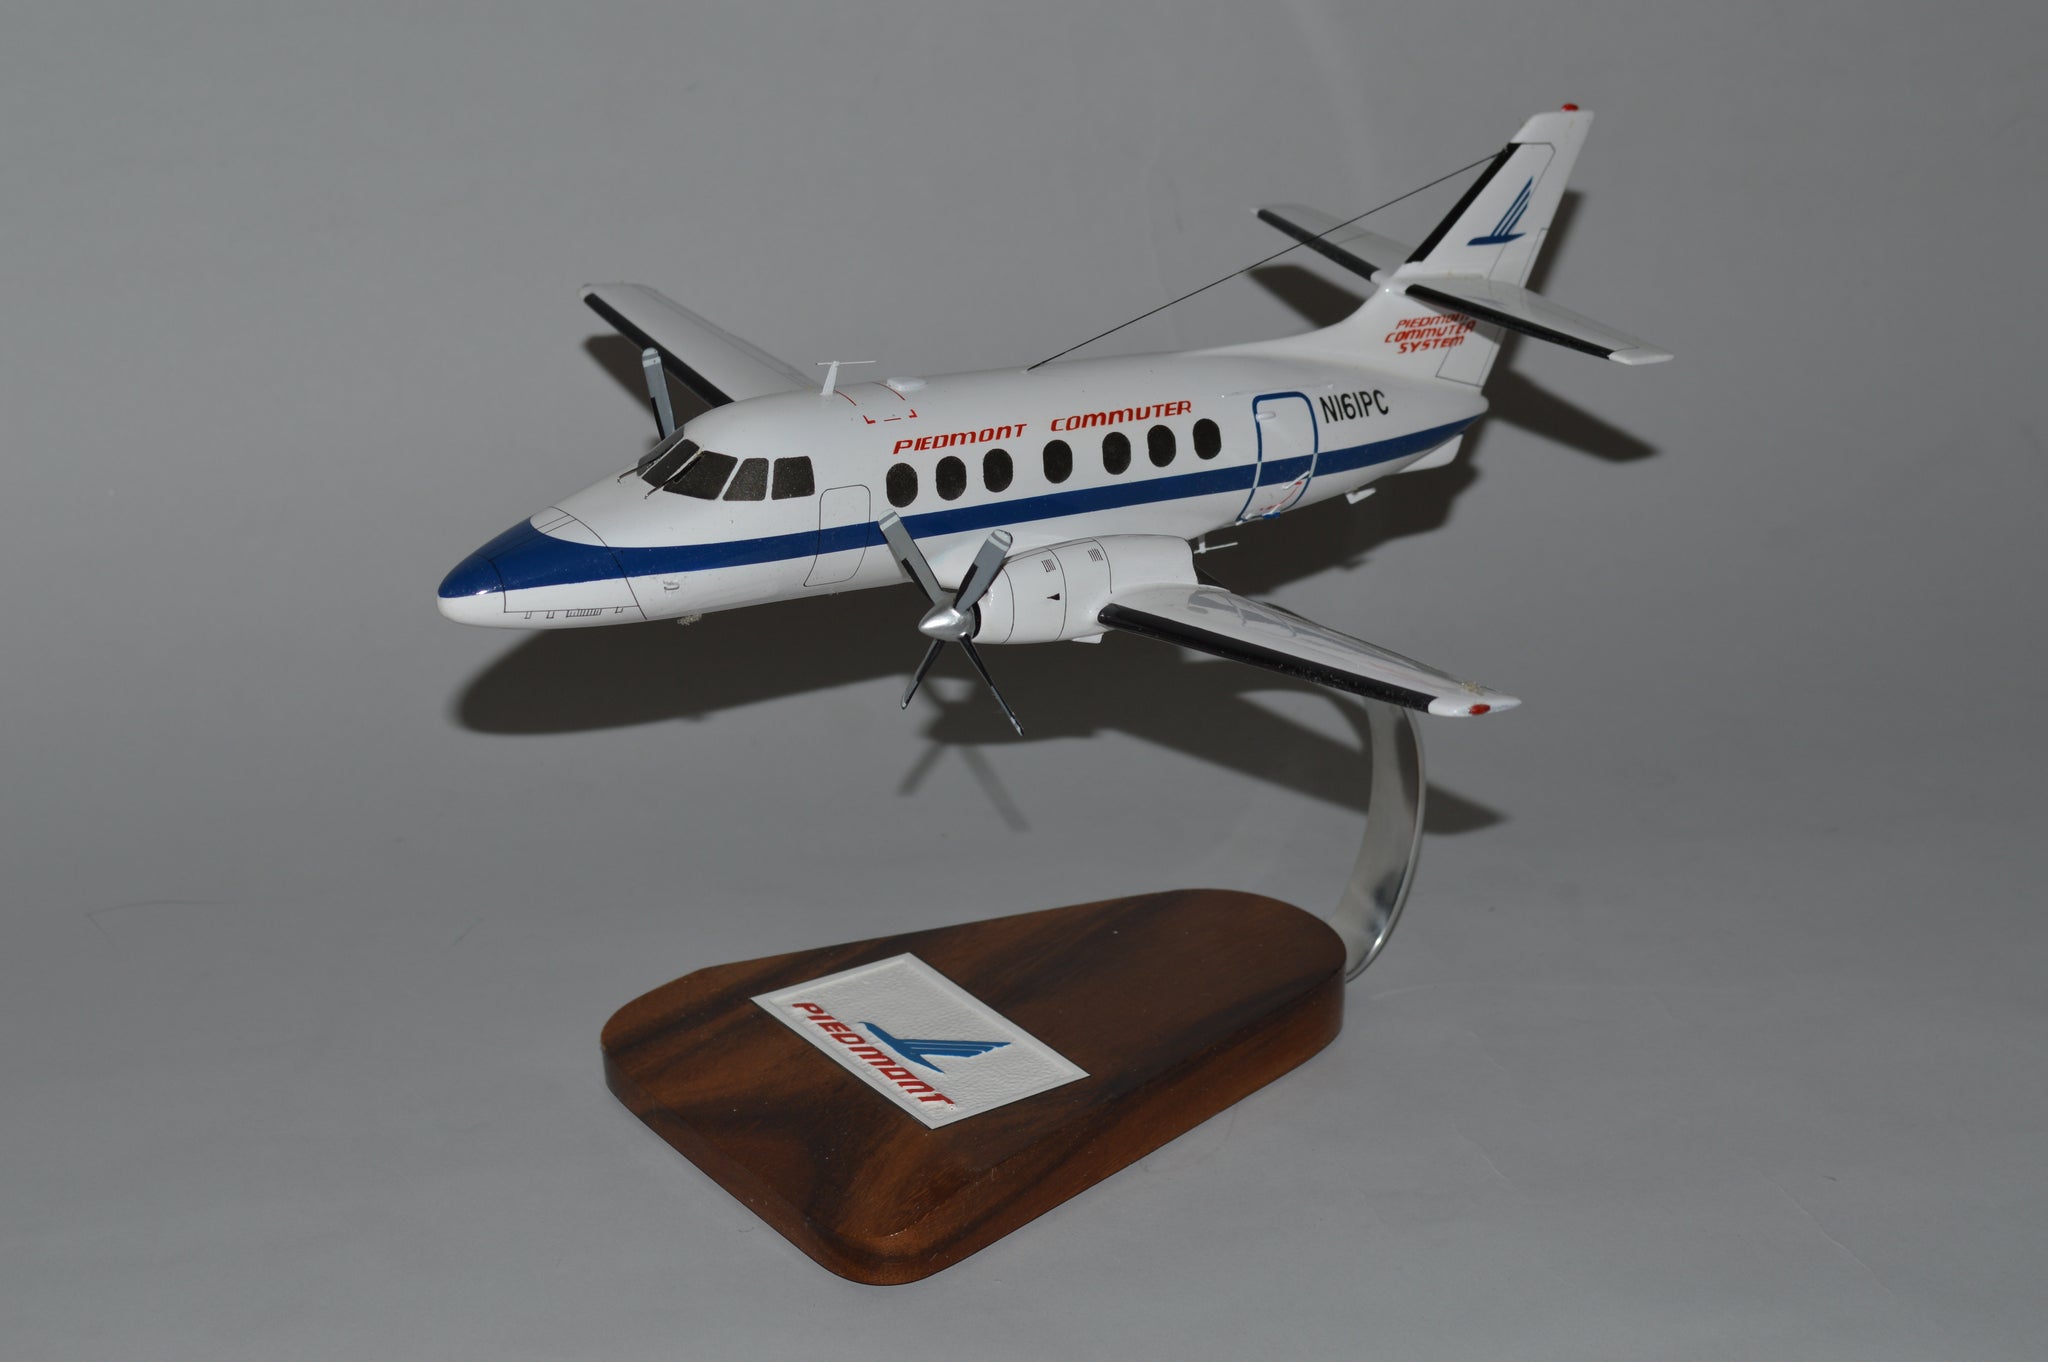 BAe-31 Jetstream / Piedmont Commuter